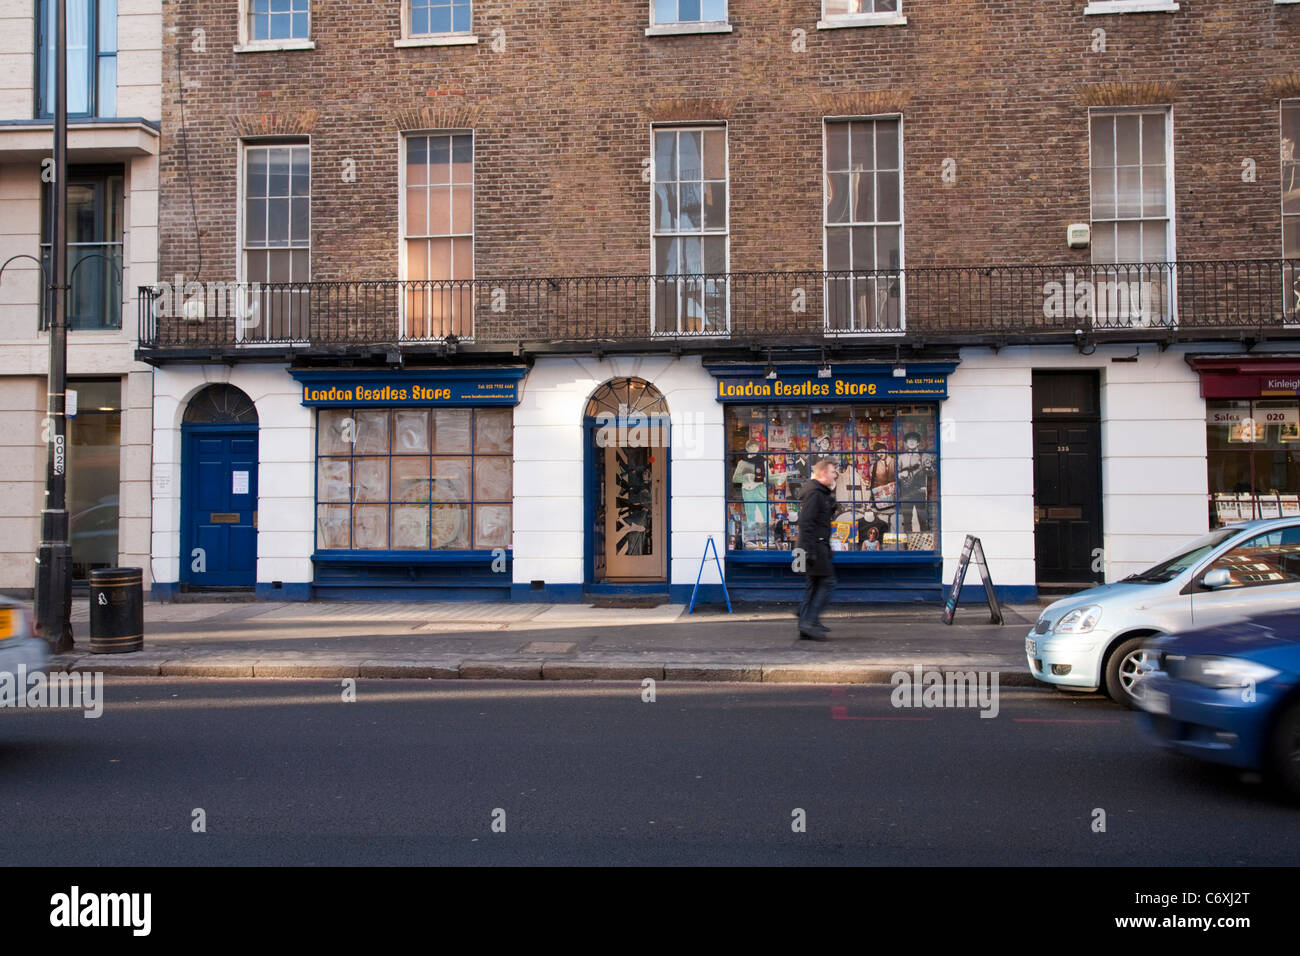 London Beatles Store, Baker Street, London, Uk Stock Photo